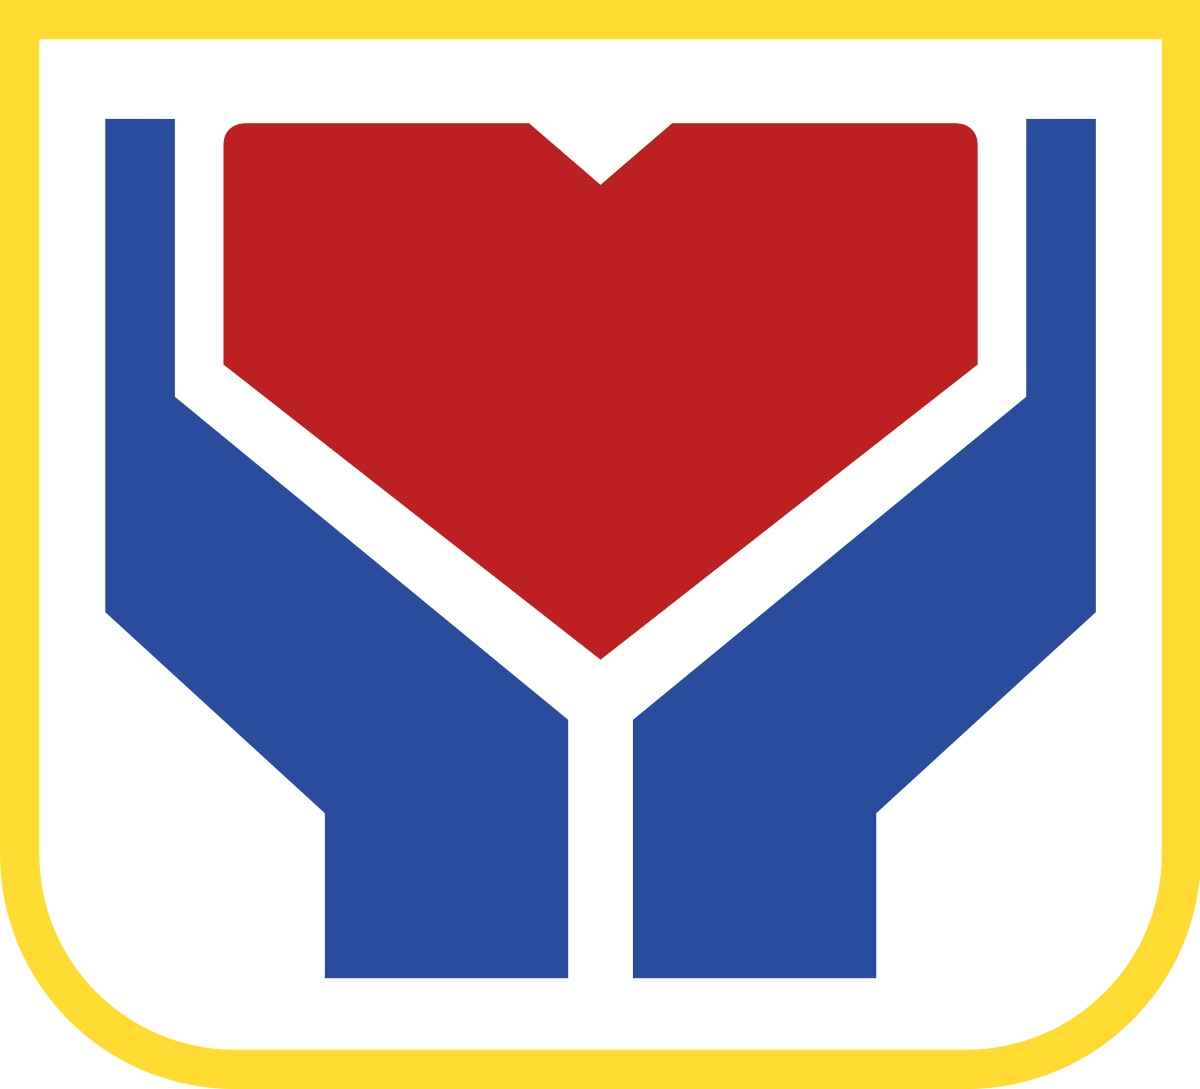 DSWD Logo